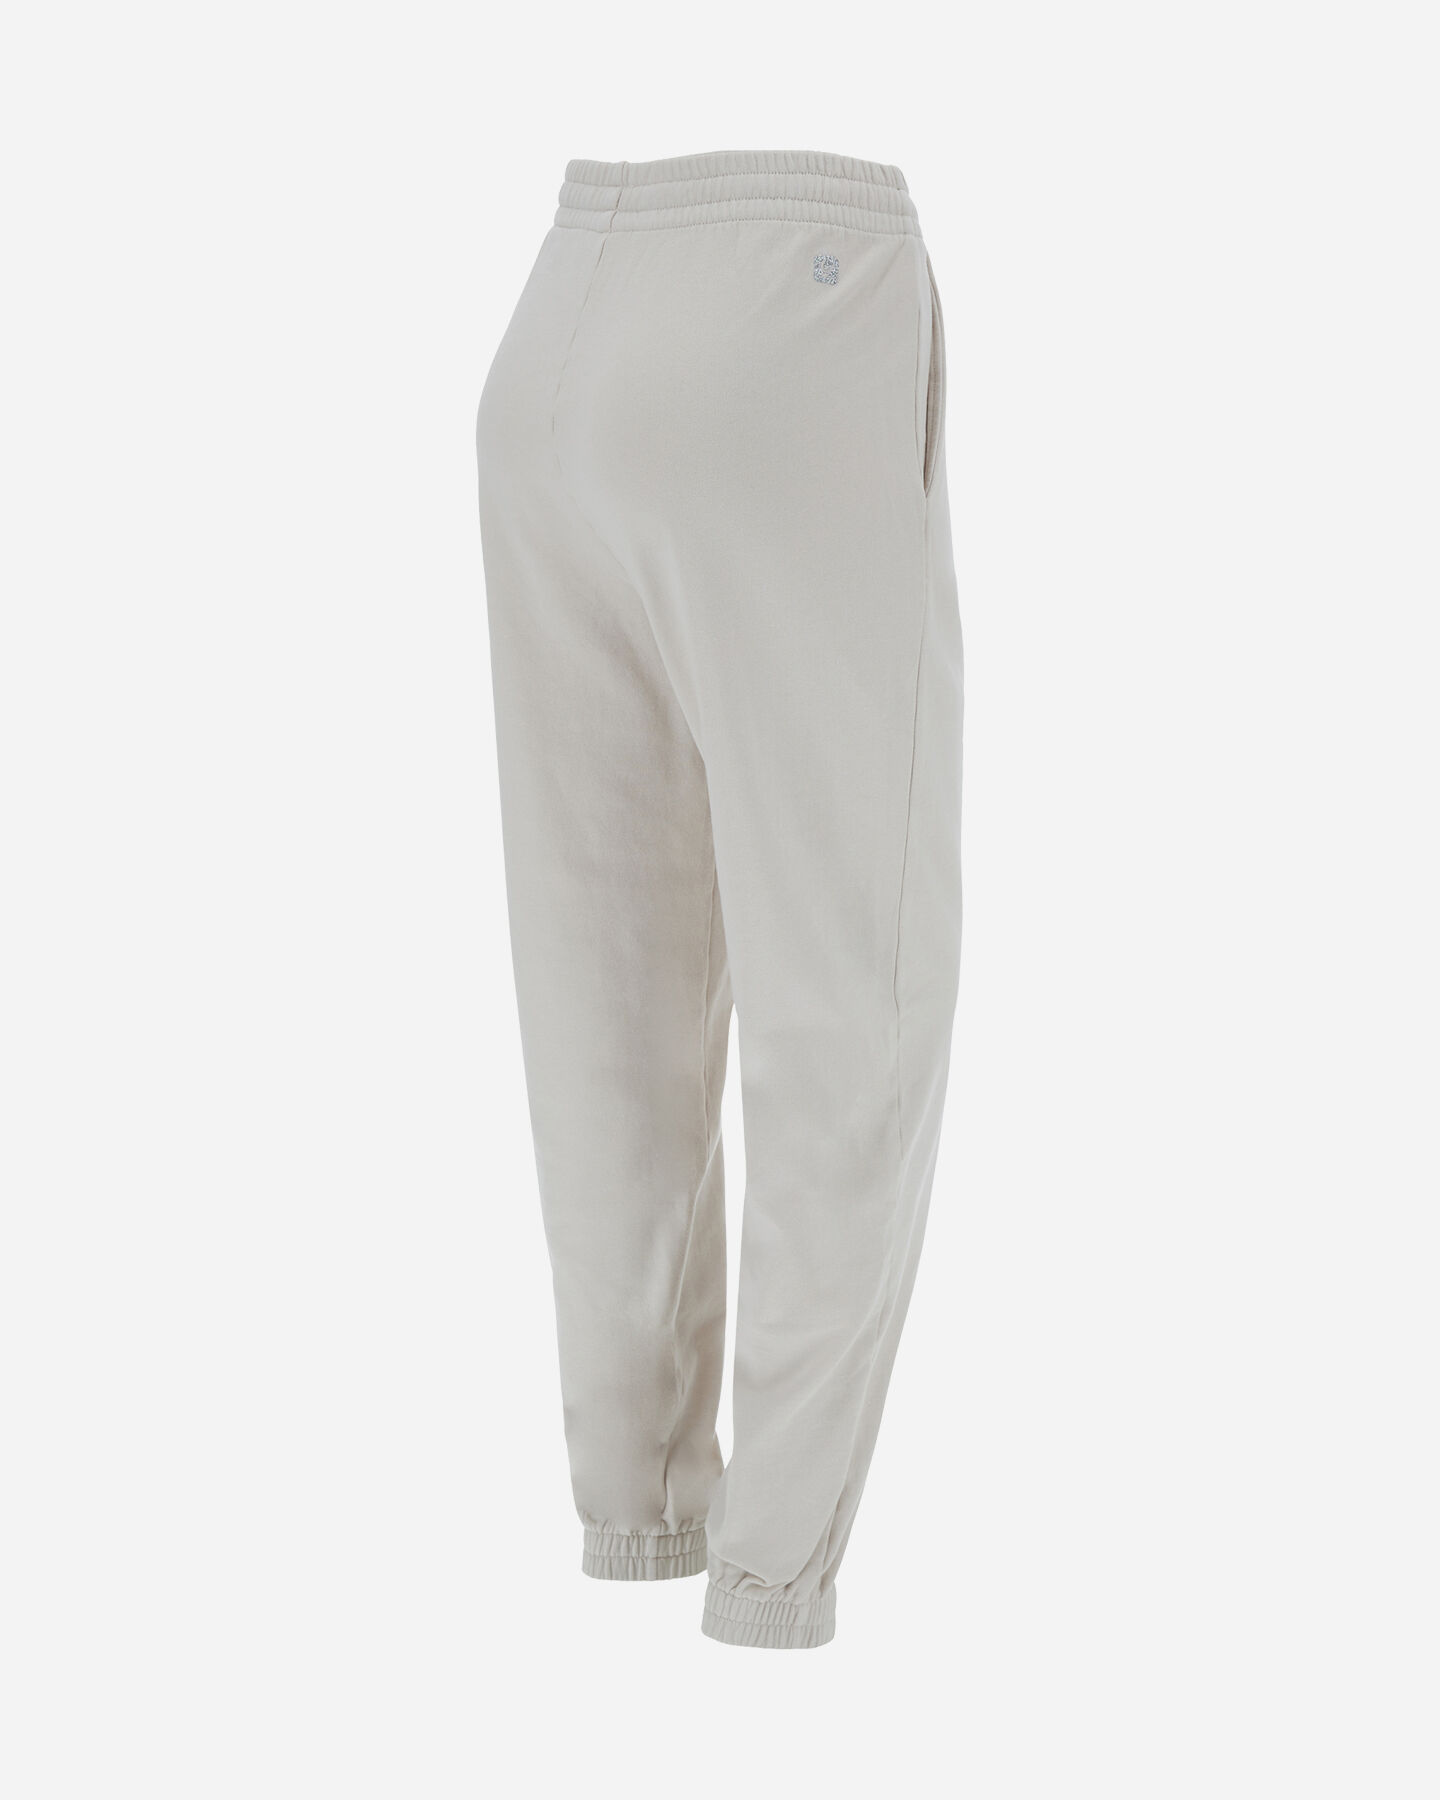  Pantalone FREDDY ELASTIC SLOGO W S5485990|Z40X-|L scatto 1